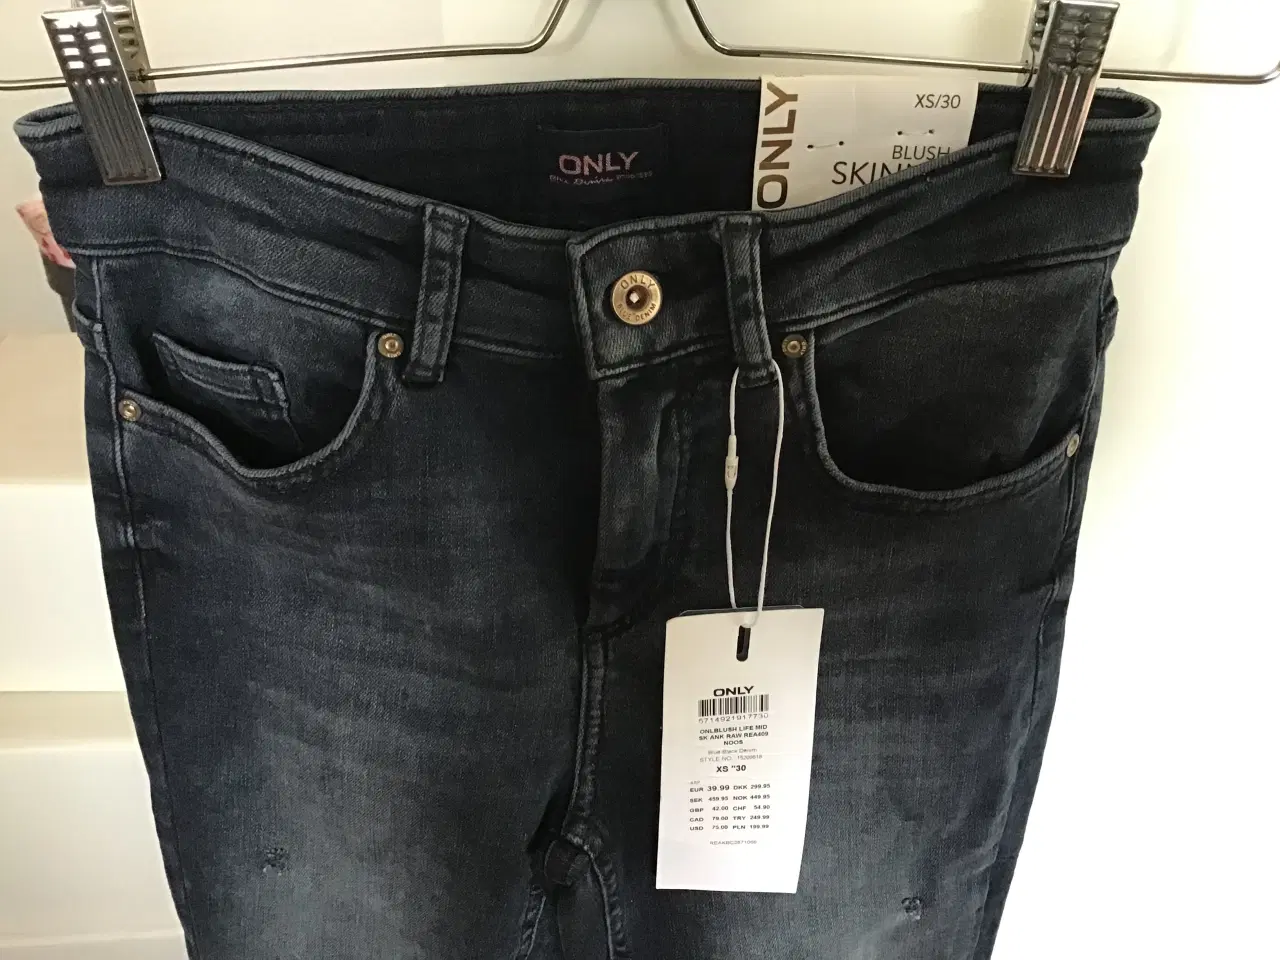 Billede 3 - Only skinny jeans XS/30